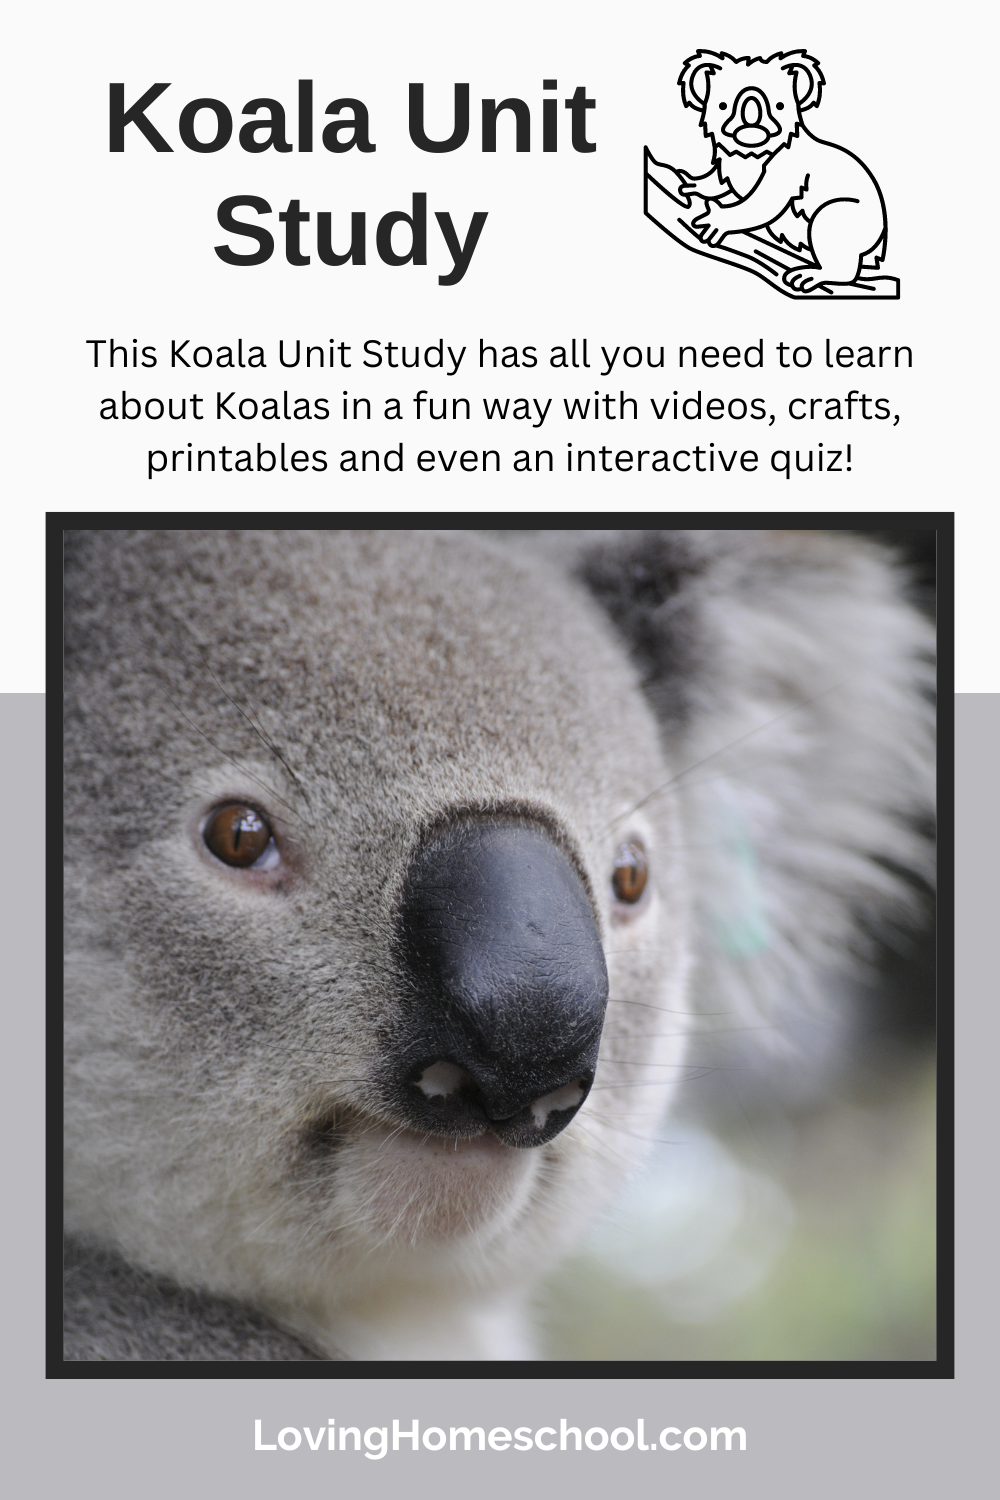 Koala Unit Study Pinterest Pin